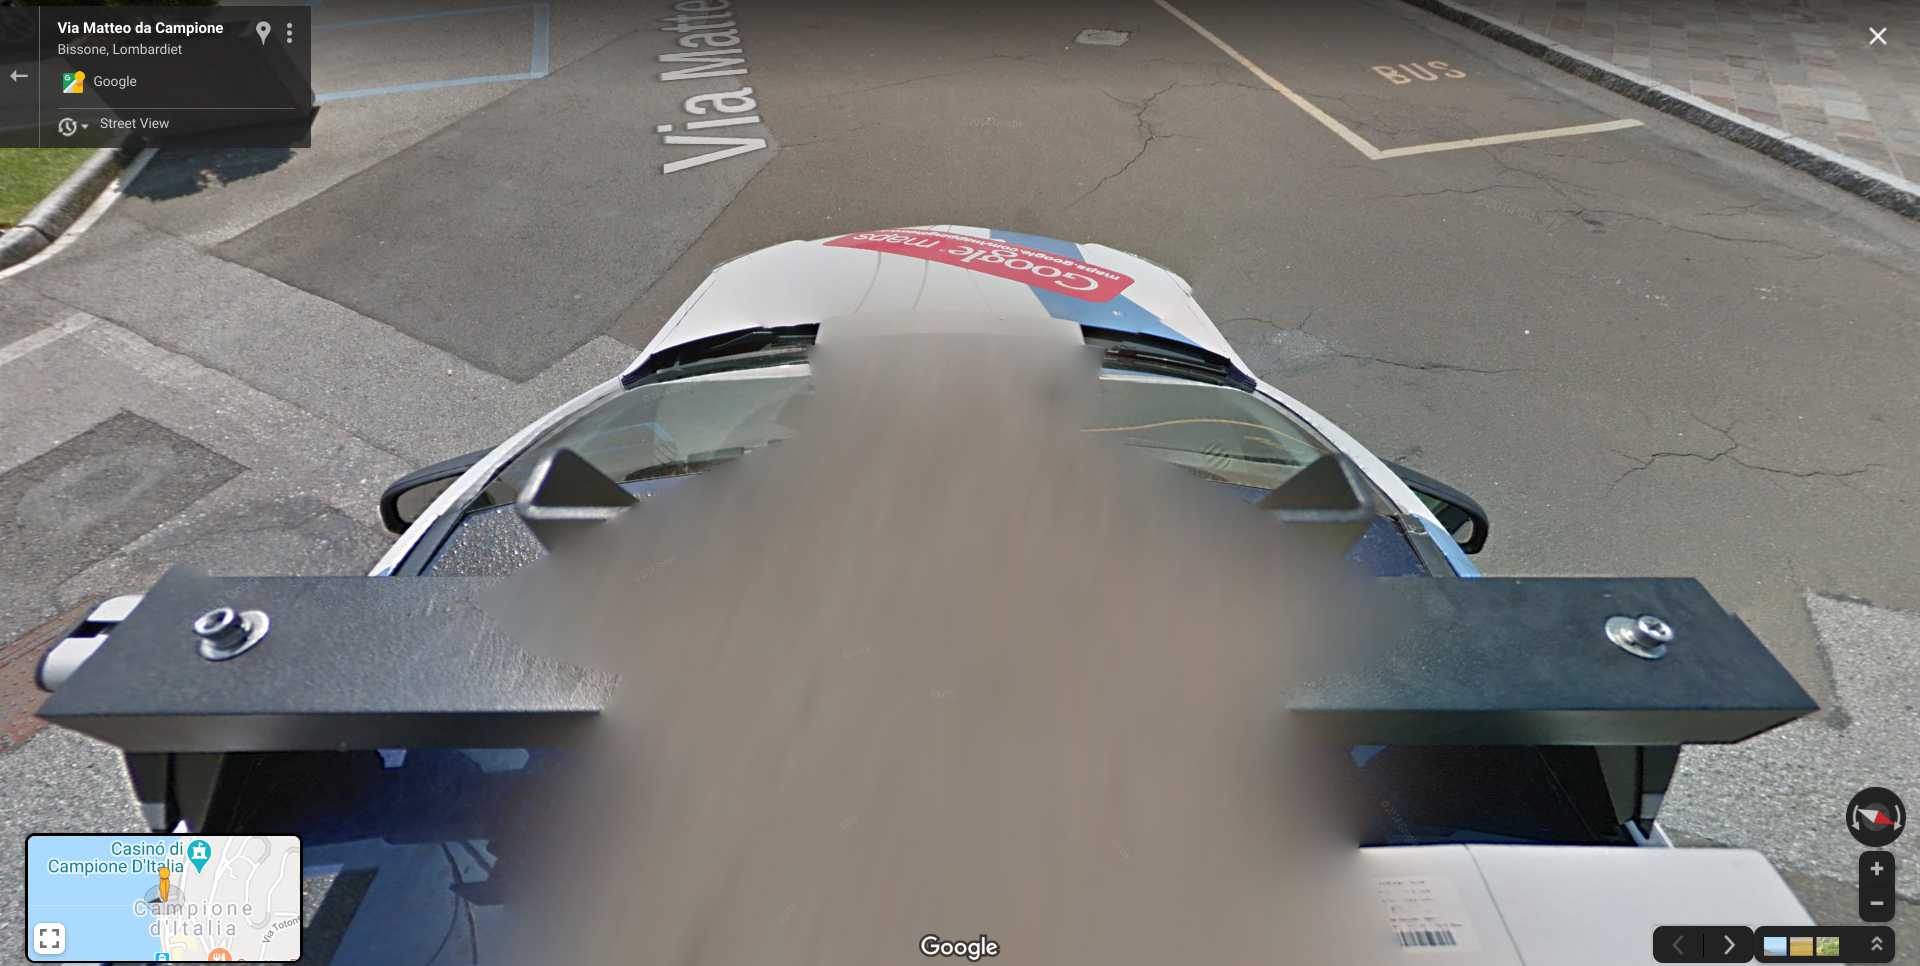 ya can see the google maps car lol - StreetViewFun